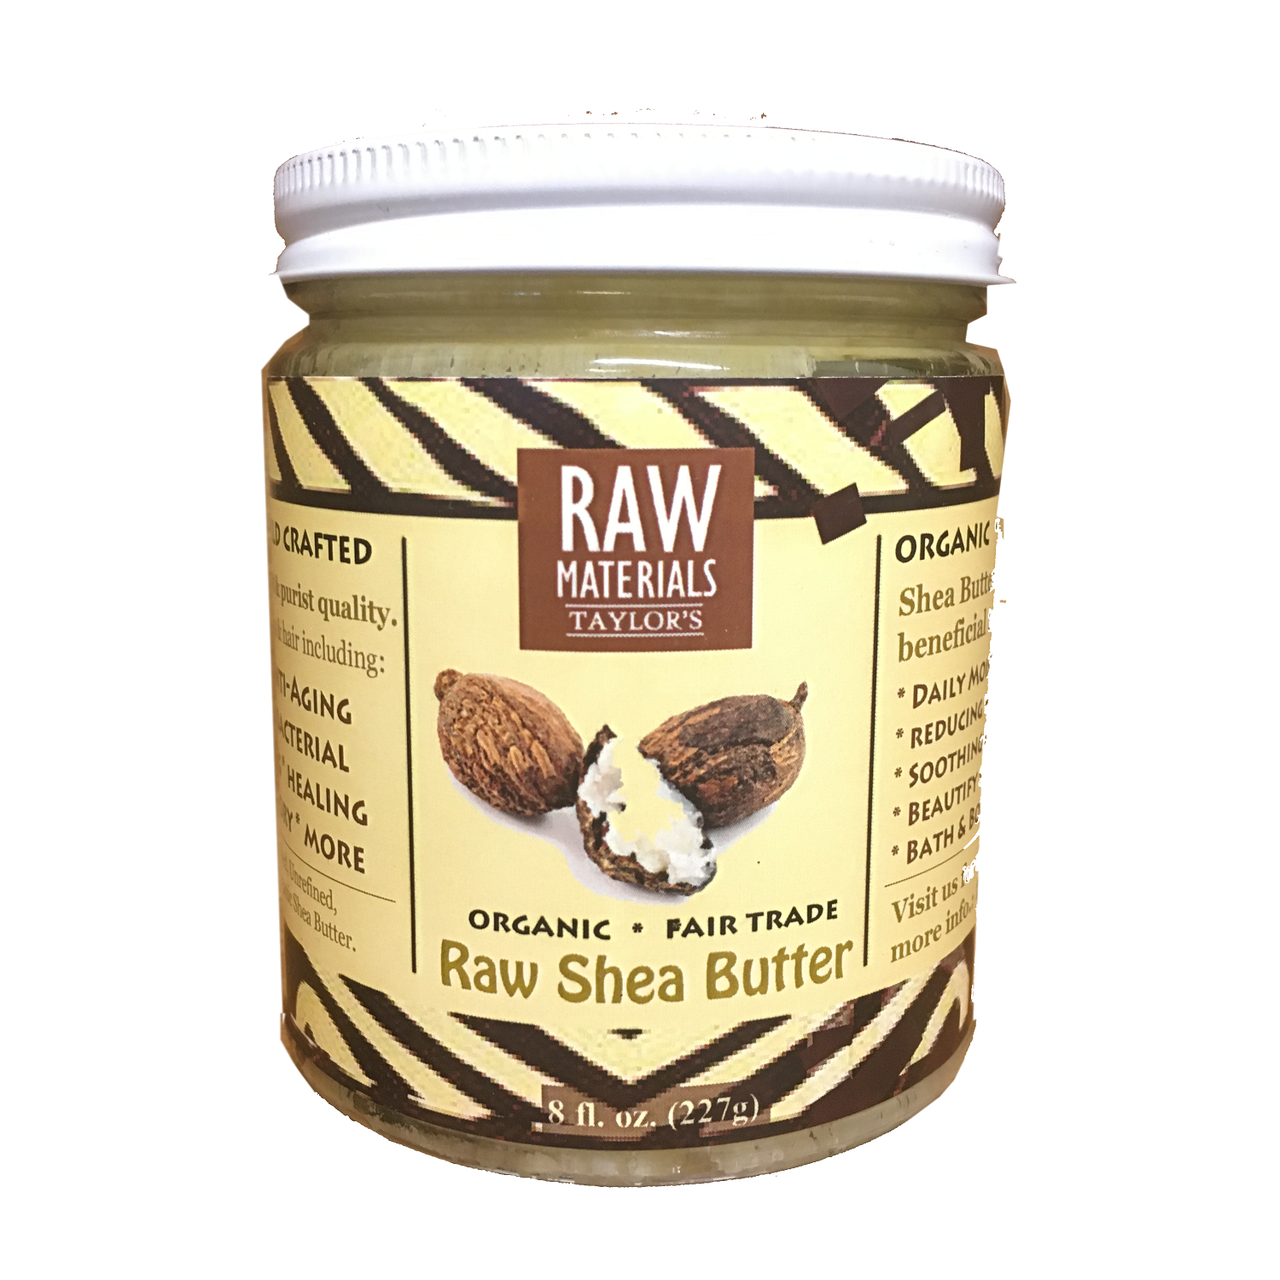 RAW Materials - Shea Butter RAW, Wild Crafted, Organic, Fair Trade